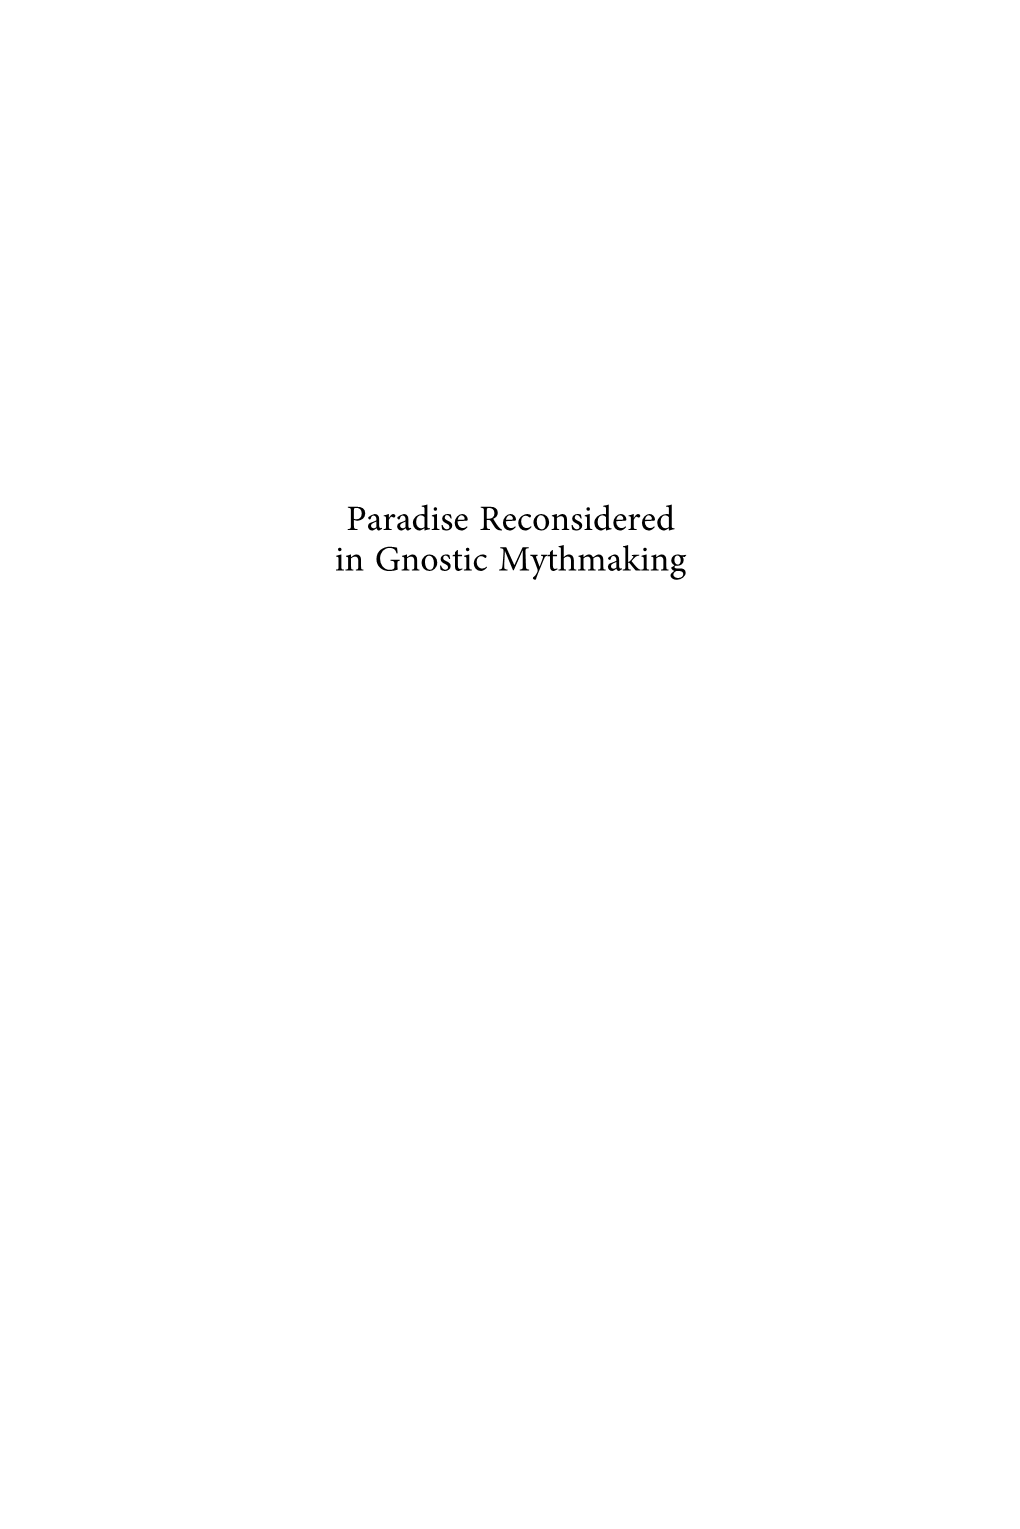 Paradise Reconsidered in Gnostic Mythmaking Nag Hammadi and Manichaean Studies